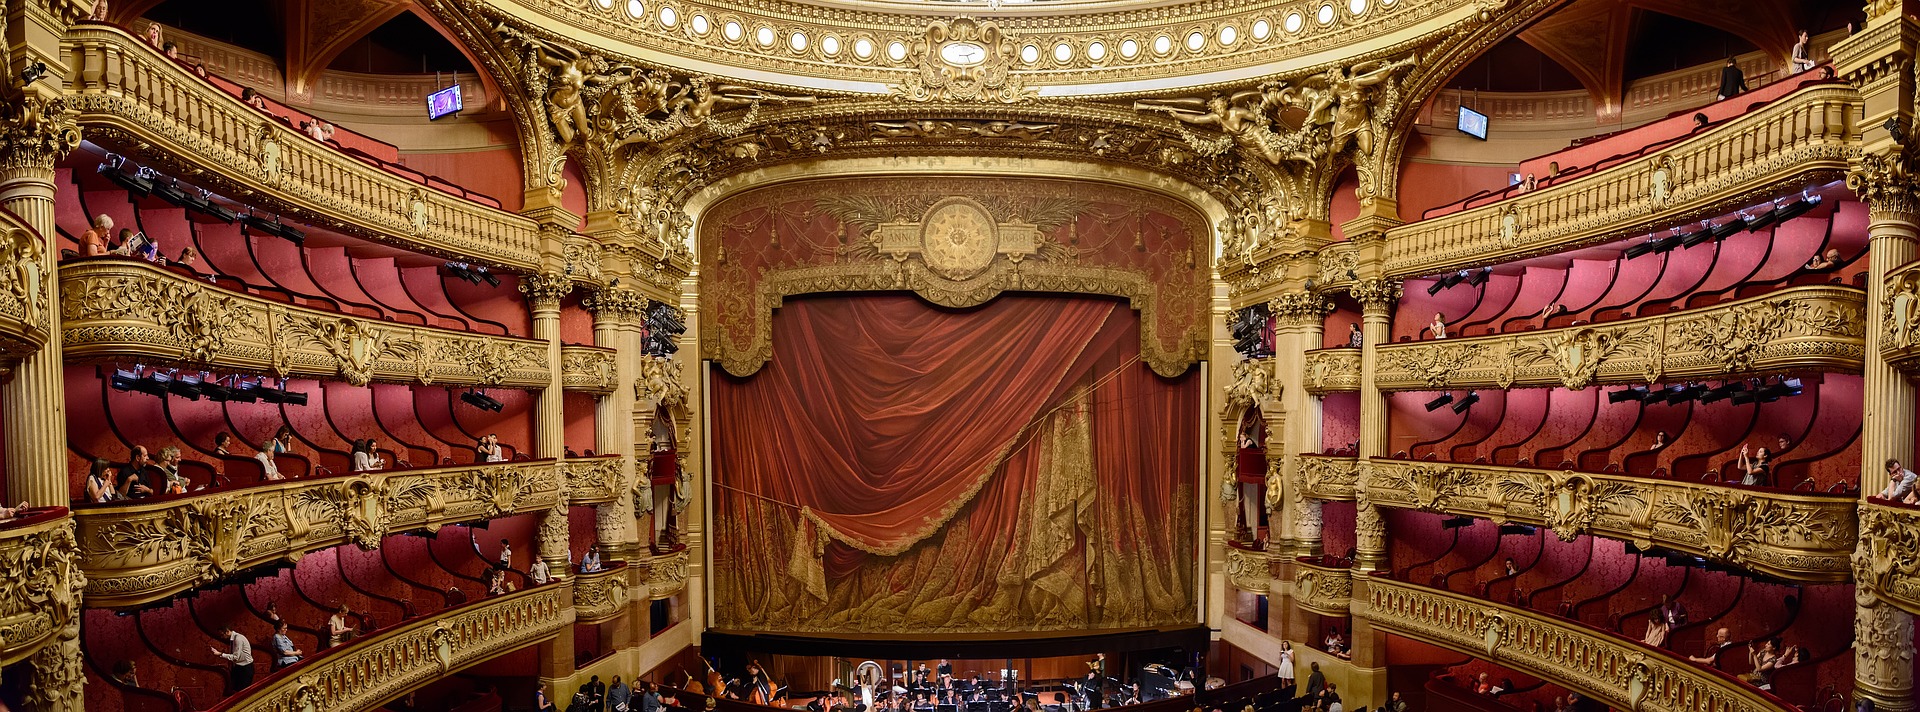 La Opera Italiana